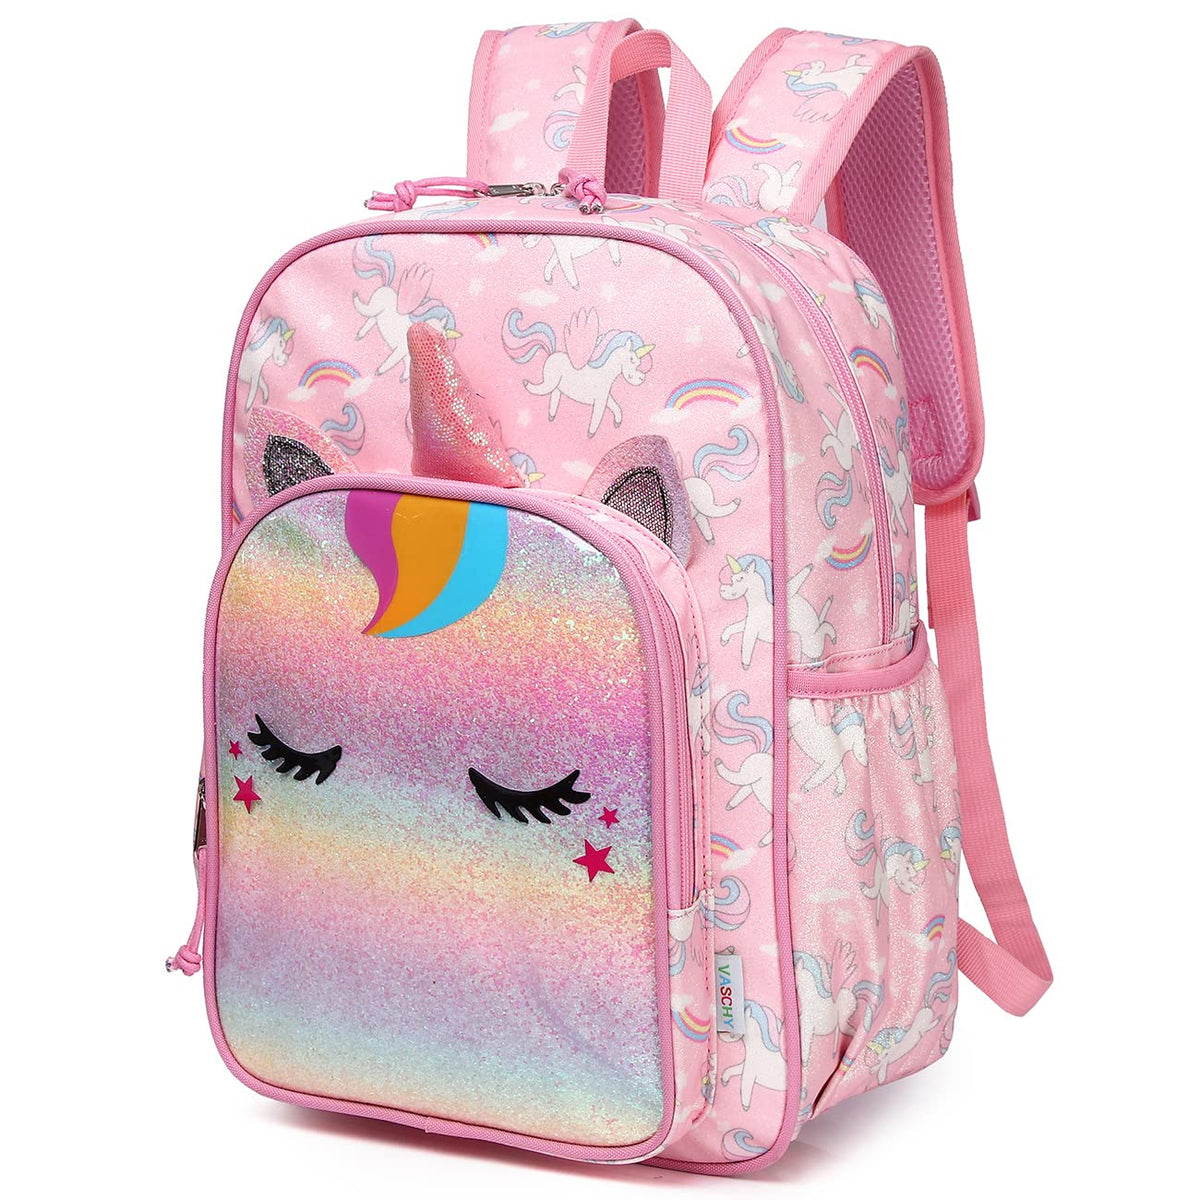 VASCHY Girls Backpack, 11.5L Lightweight School Bag for Kids Water Resistant Toddler Backpack with Reflective Chest Strap Children's Rucksack with Bottle Pockets for Kindergarten(Rainbow Unicorn)